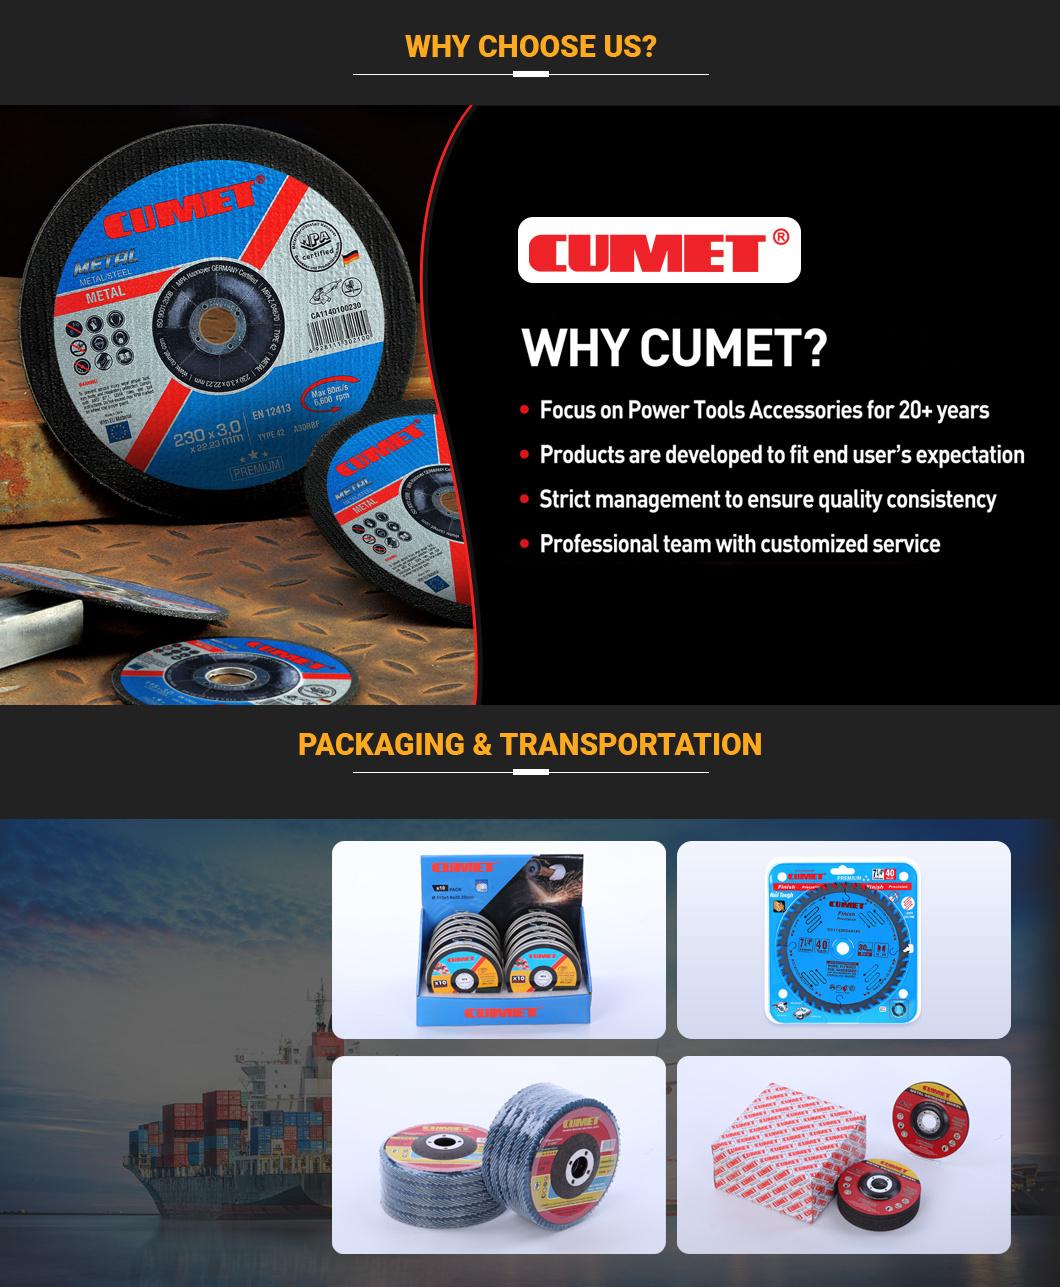 Zhejiang Jinhua Black & Decker Cumet T41A-115X1.0X22.2mm Flap Disc Wheel